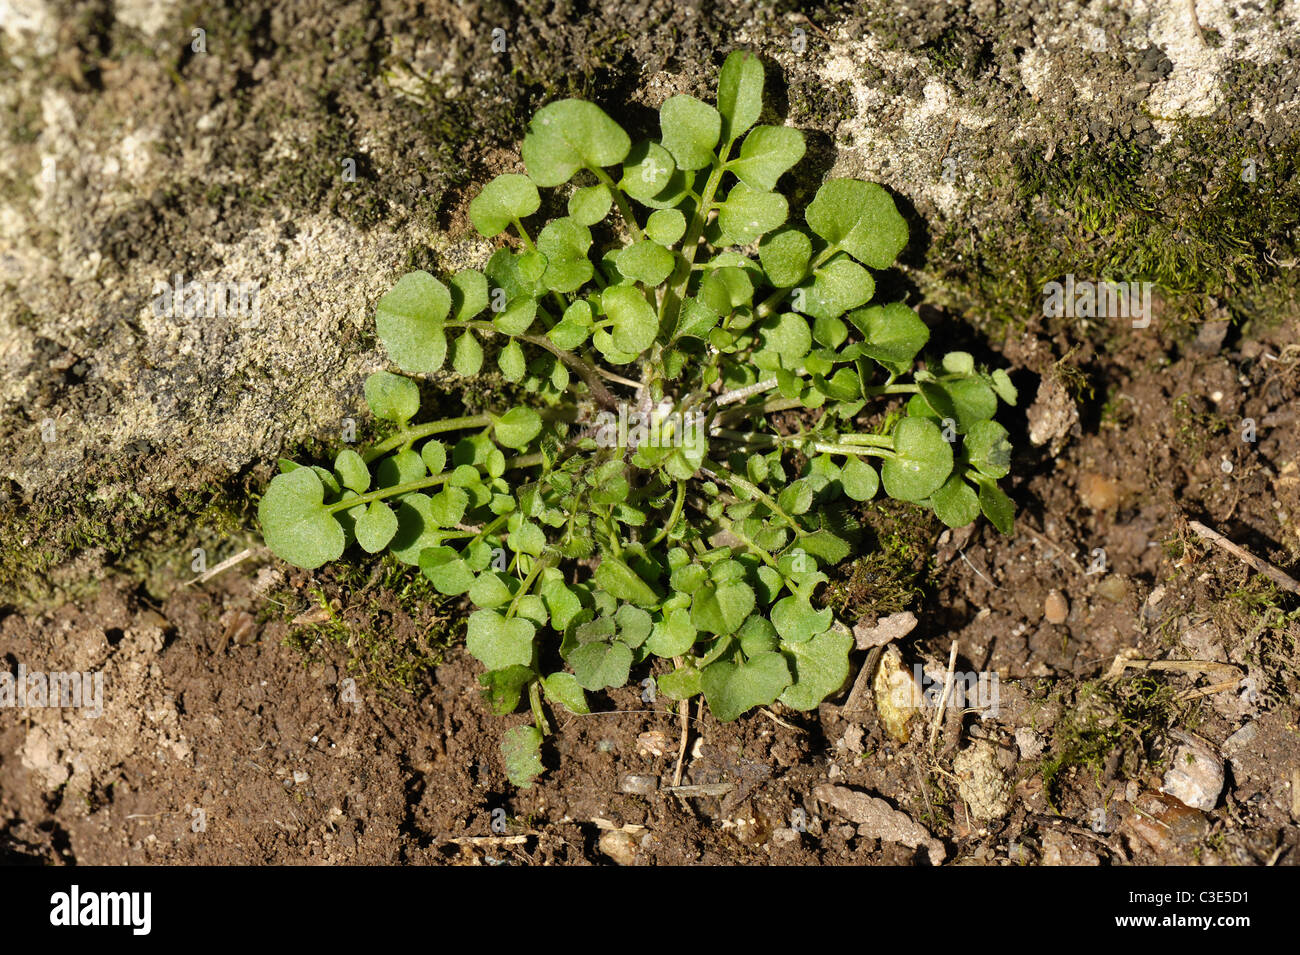 Hairy bittercress (Cardamine hirsuta) young plant rosette on soil Stock Photo